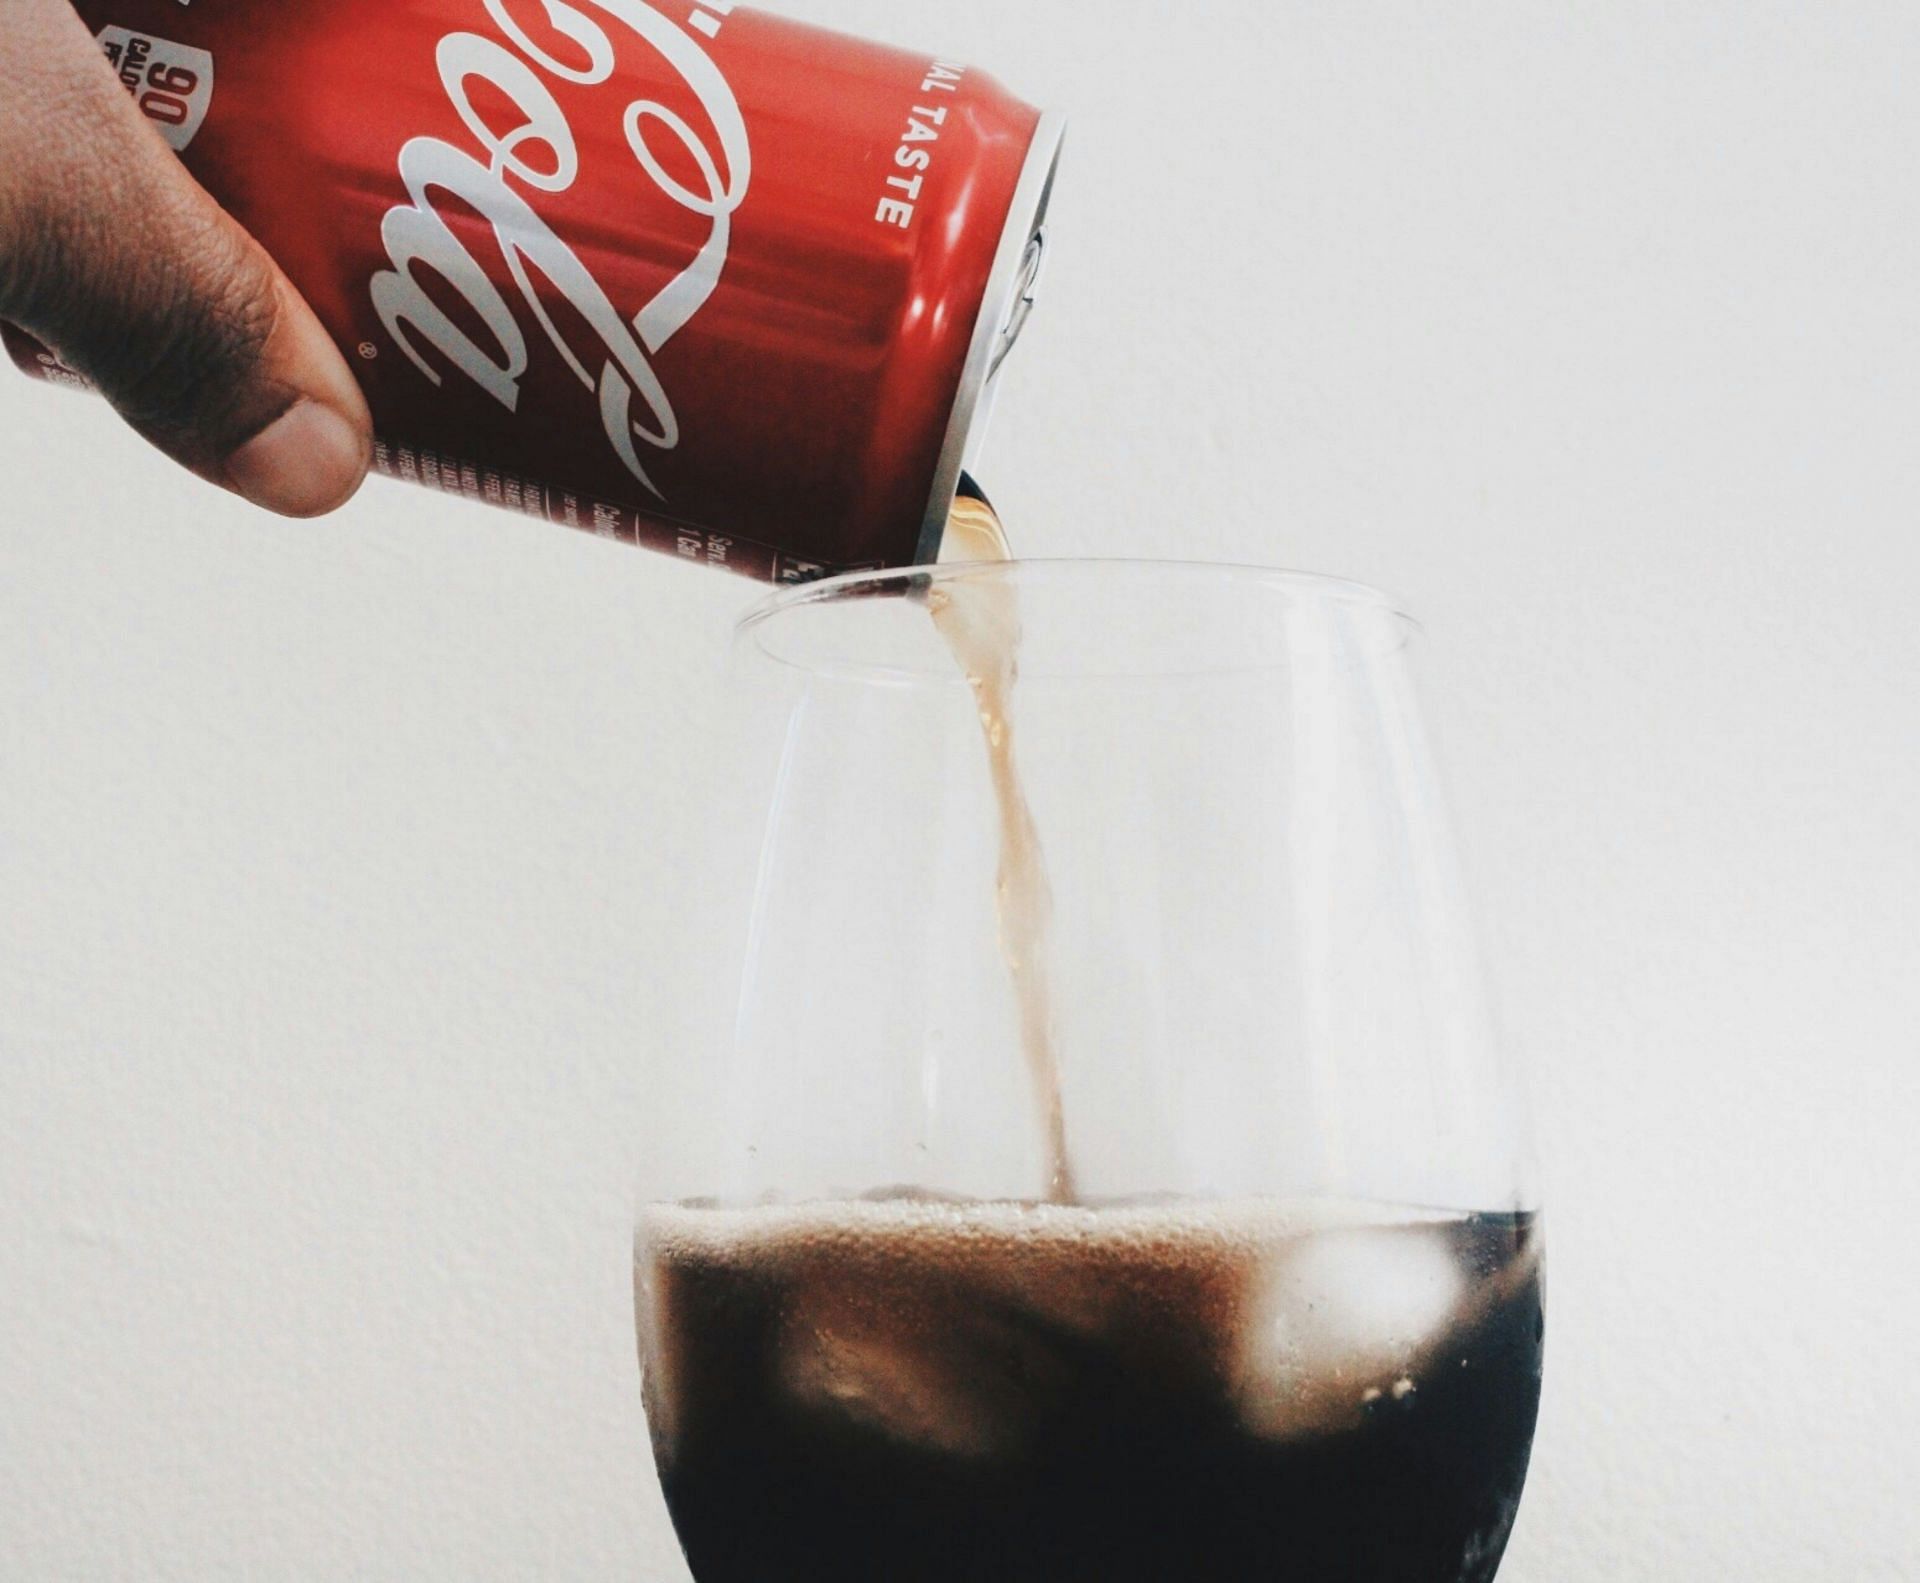 Diet Coke vs regular Coke: Regular Coke has a lot of sugar (Image by Leighann Blackwood/Unsplash)